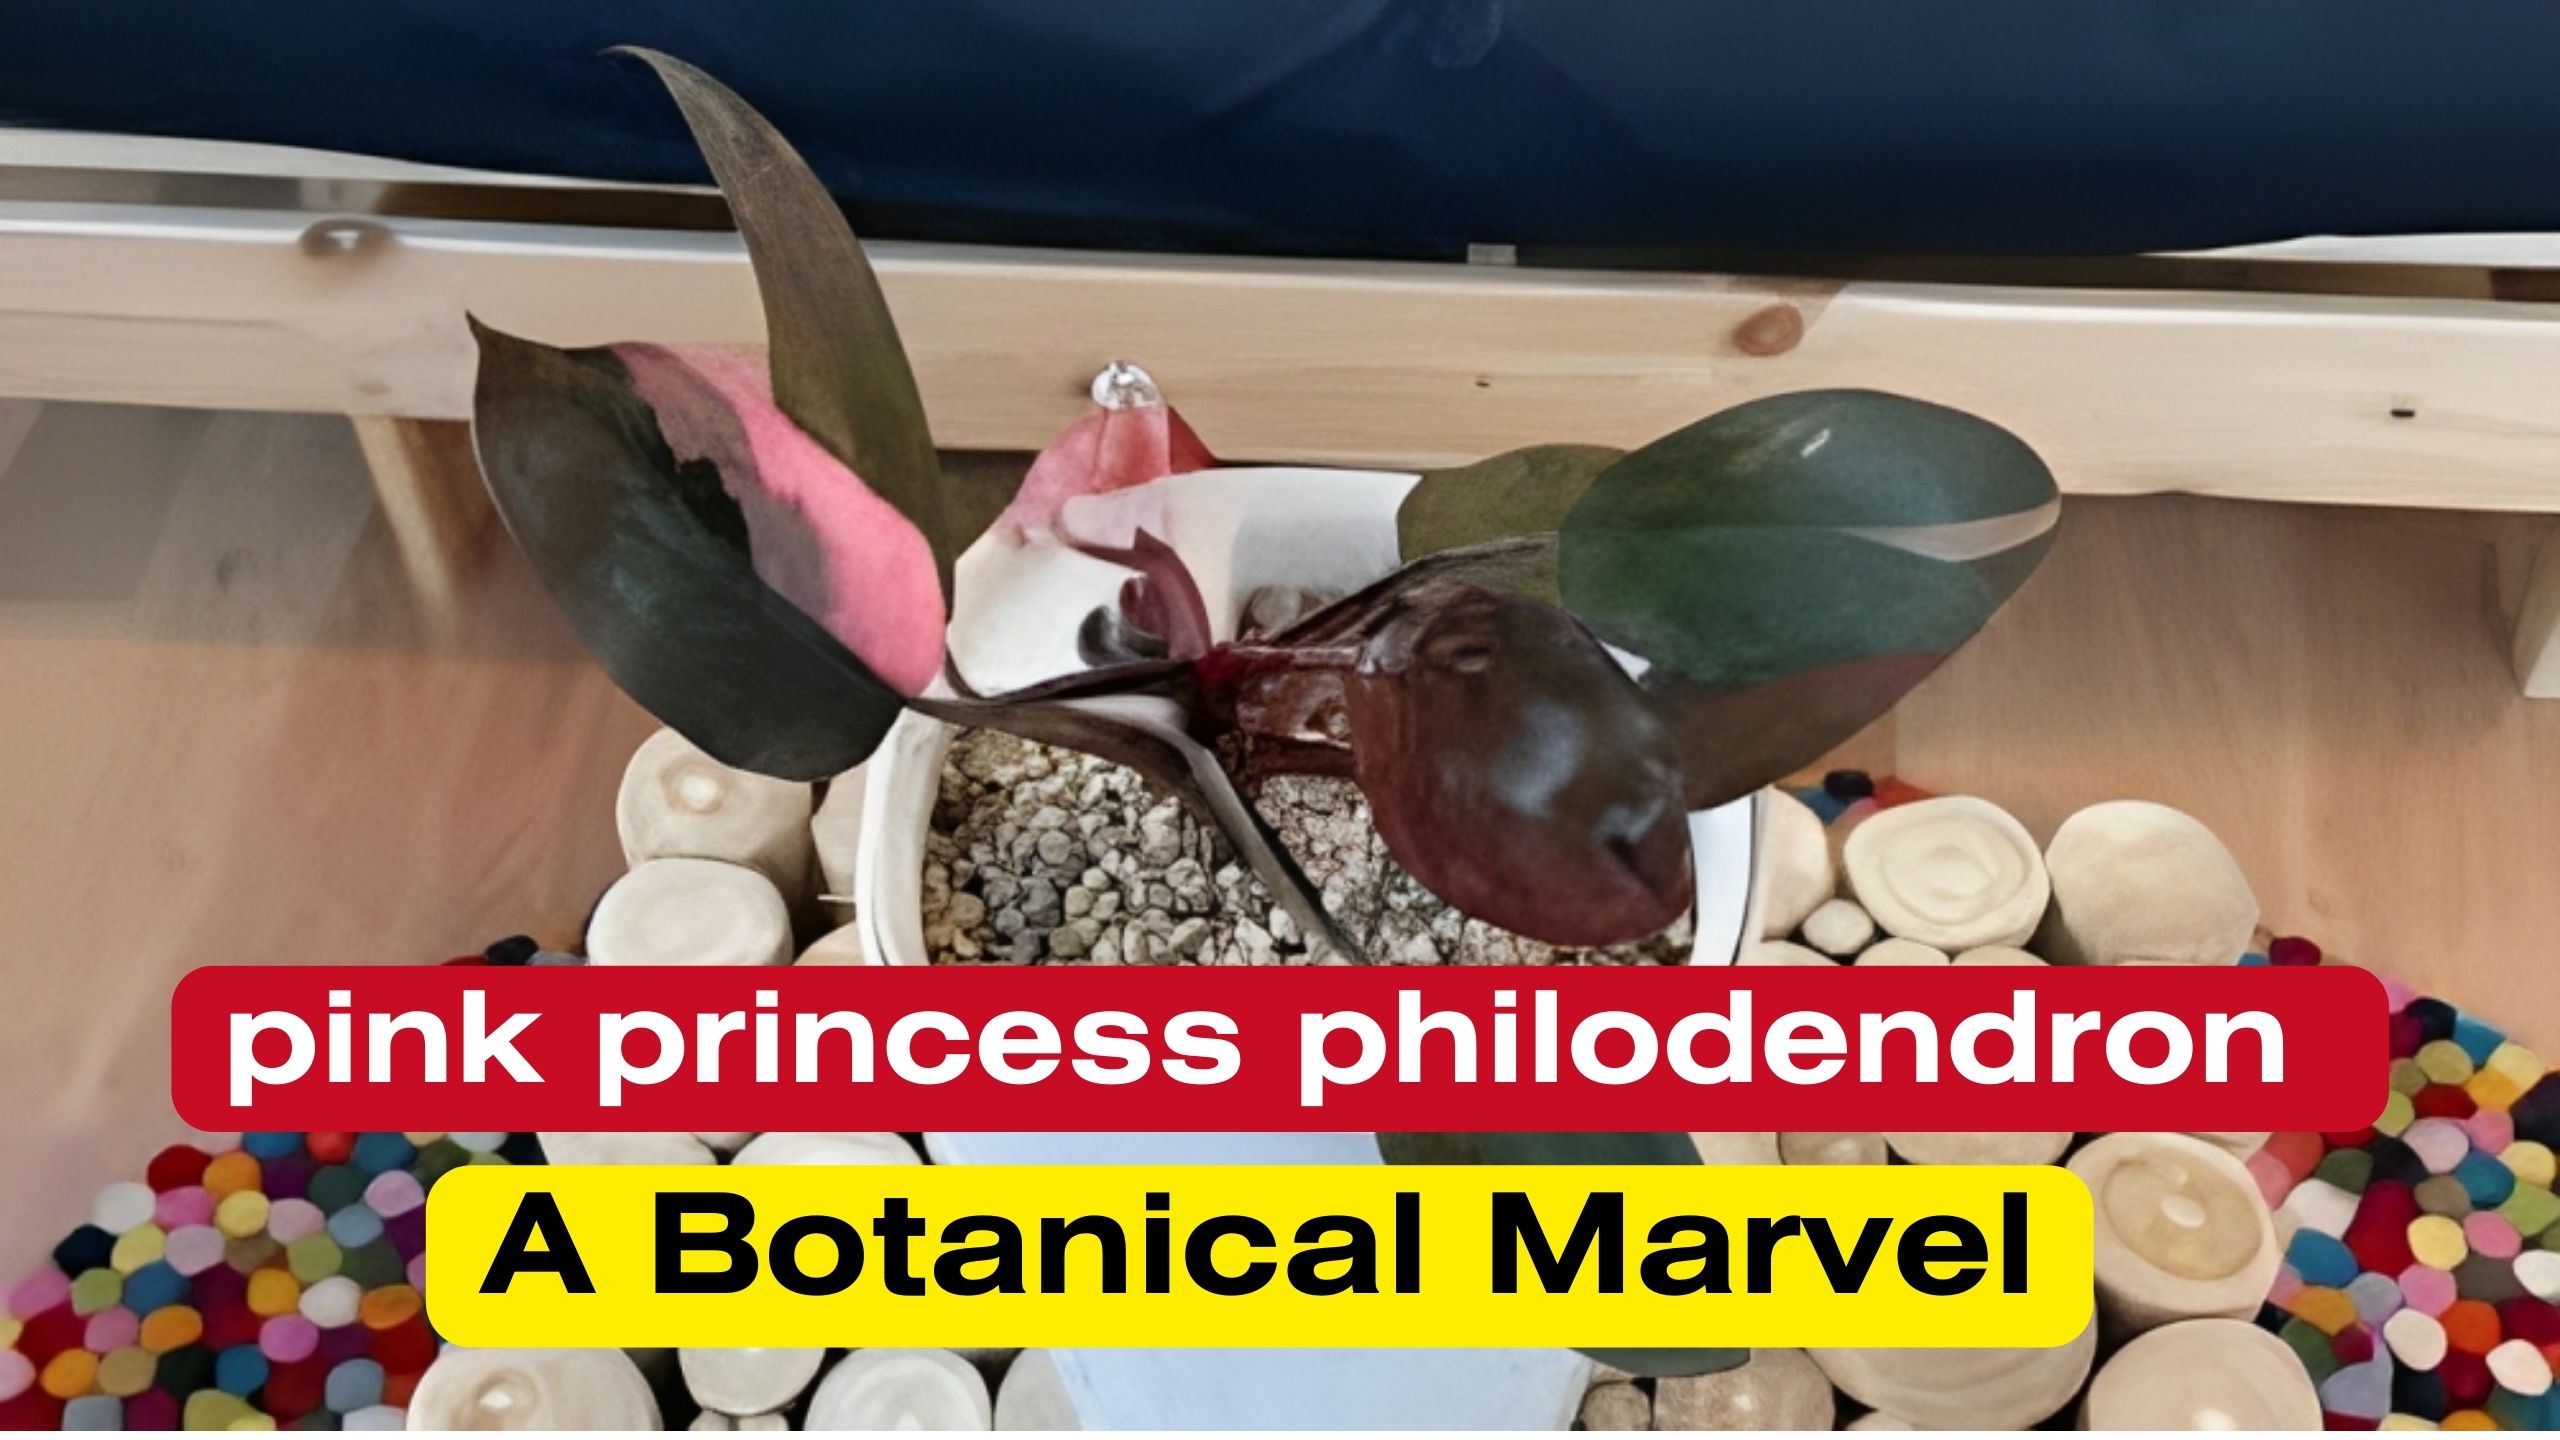 pink princess philodendron: A Botanical Marvel